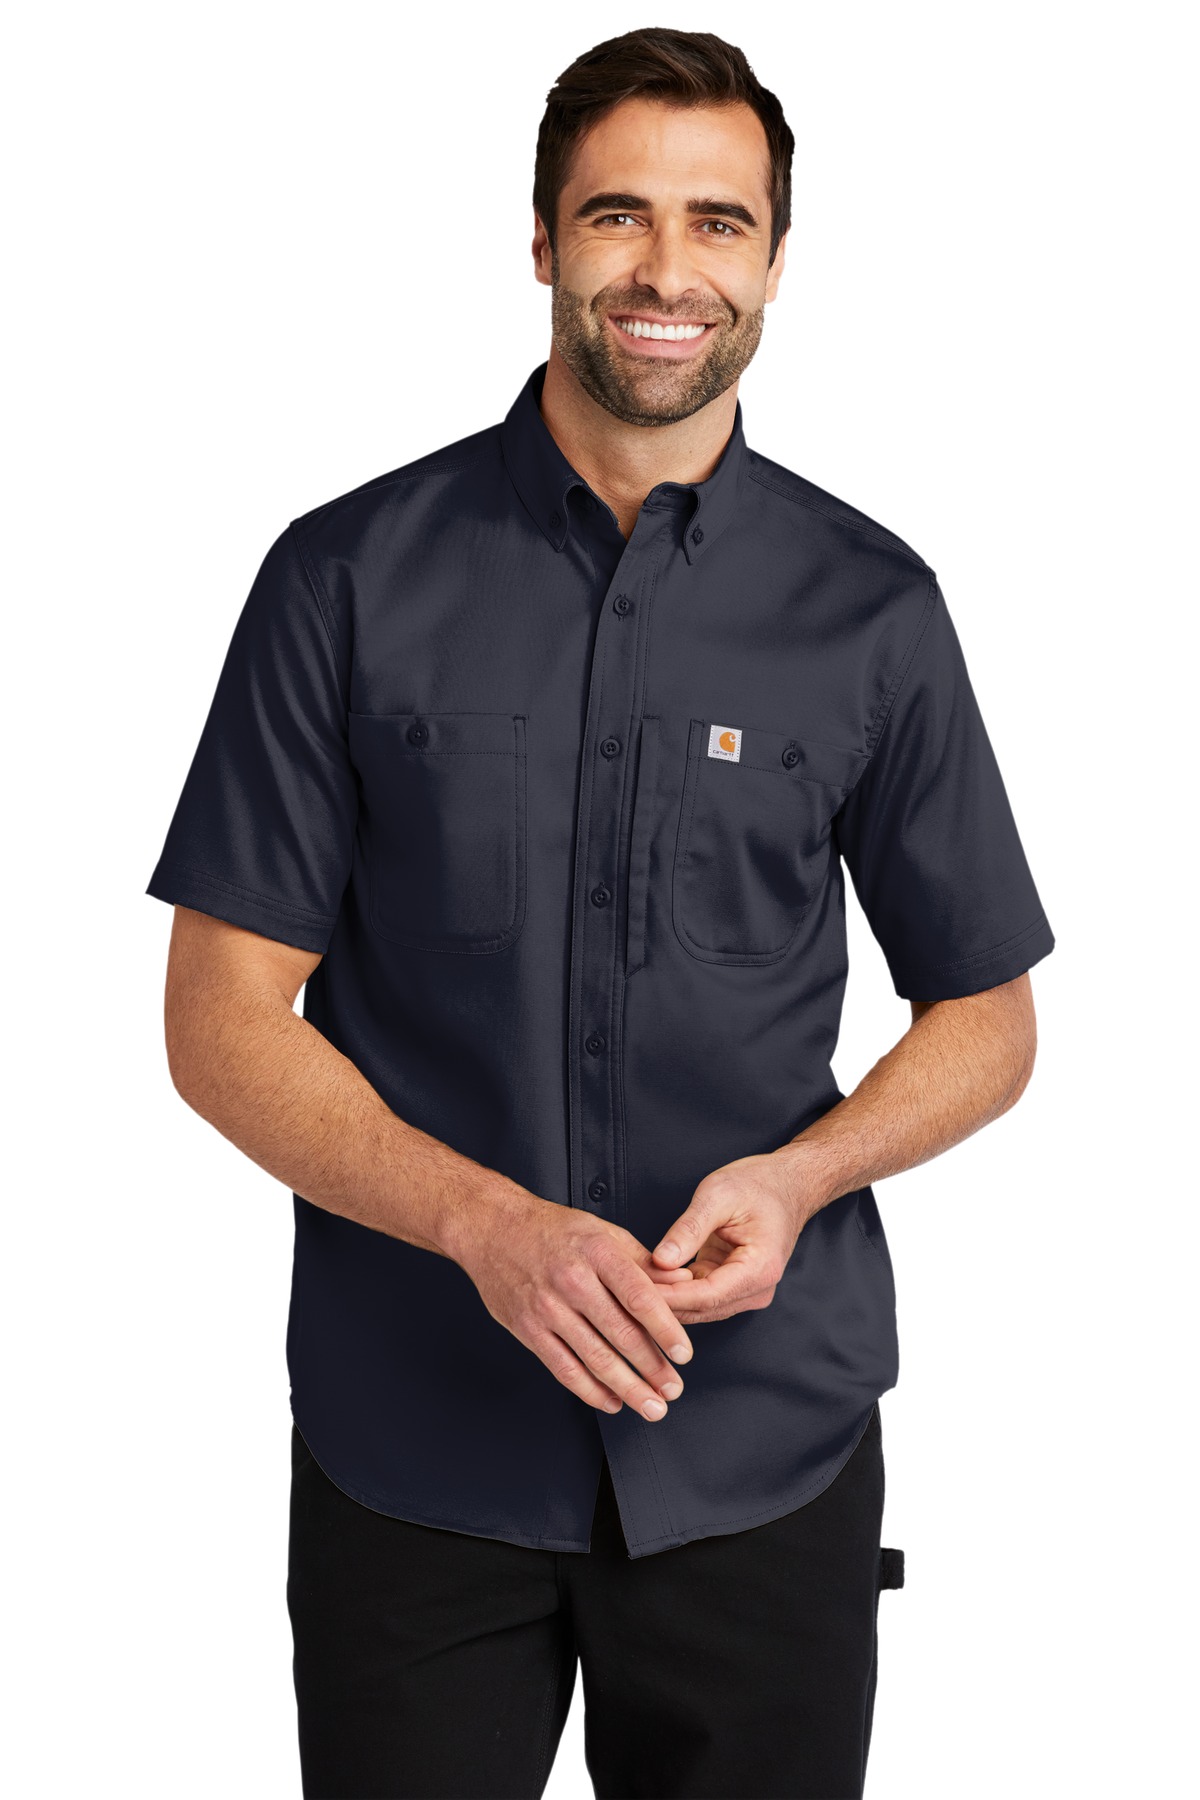 Carhartt Rugged ProfessionalSeries Short Sleeve Shirt CT102537